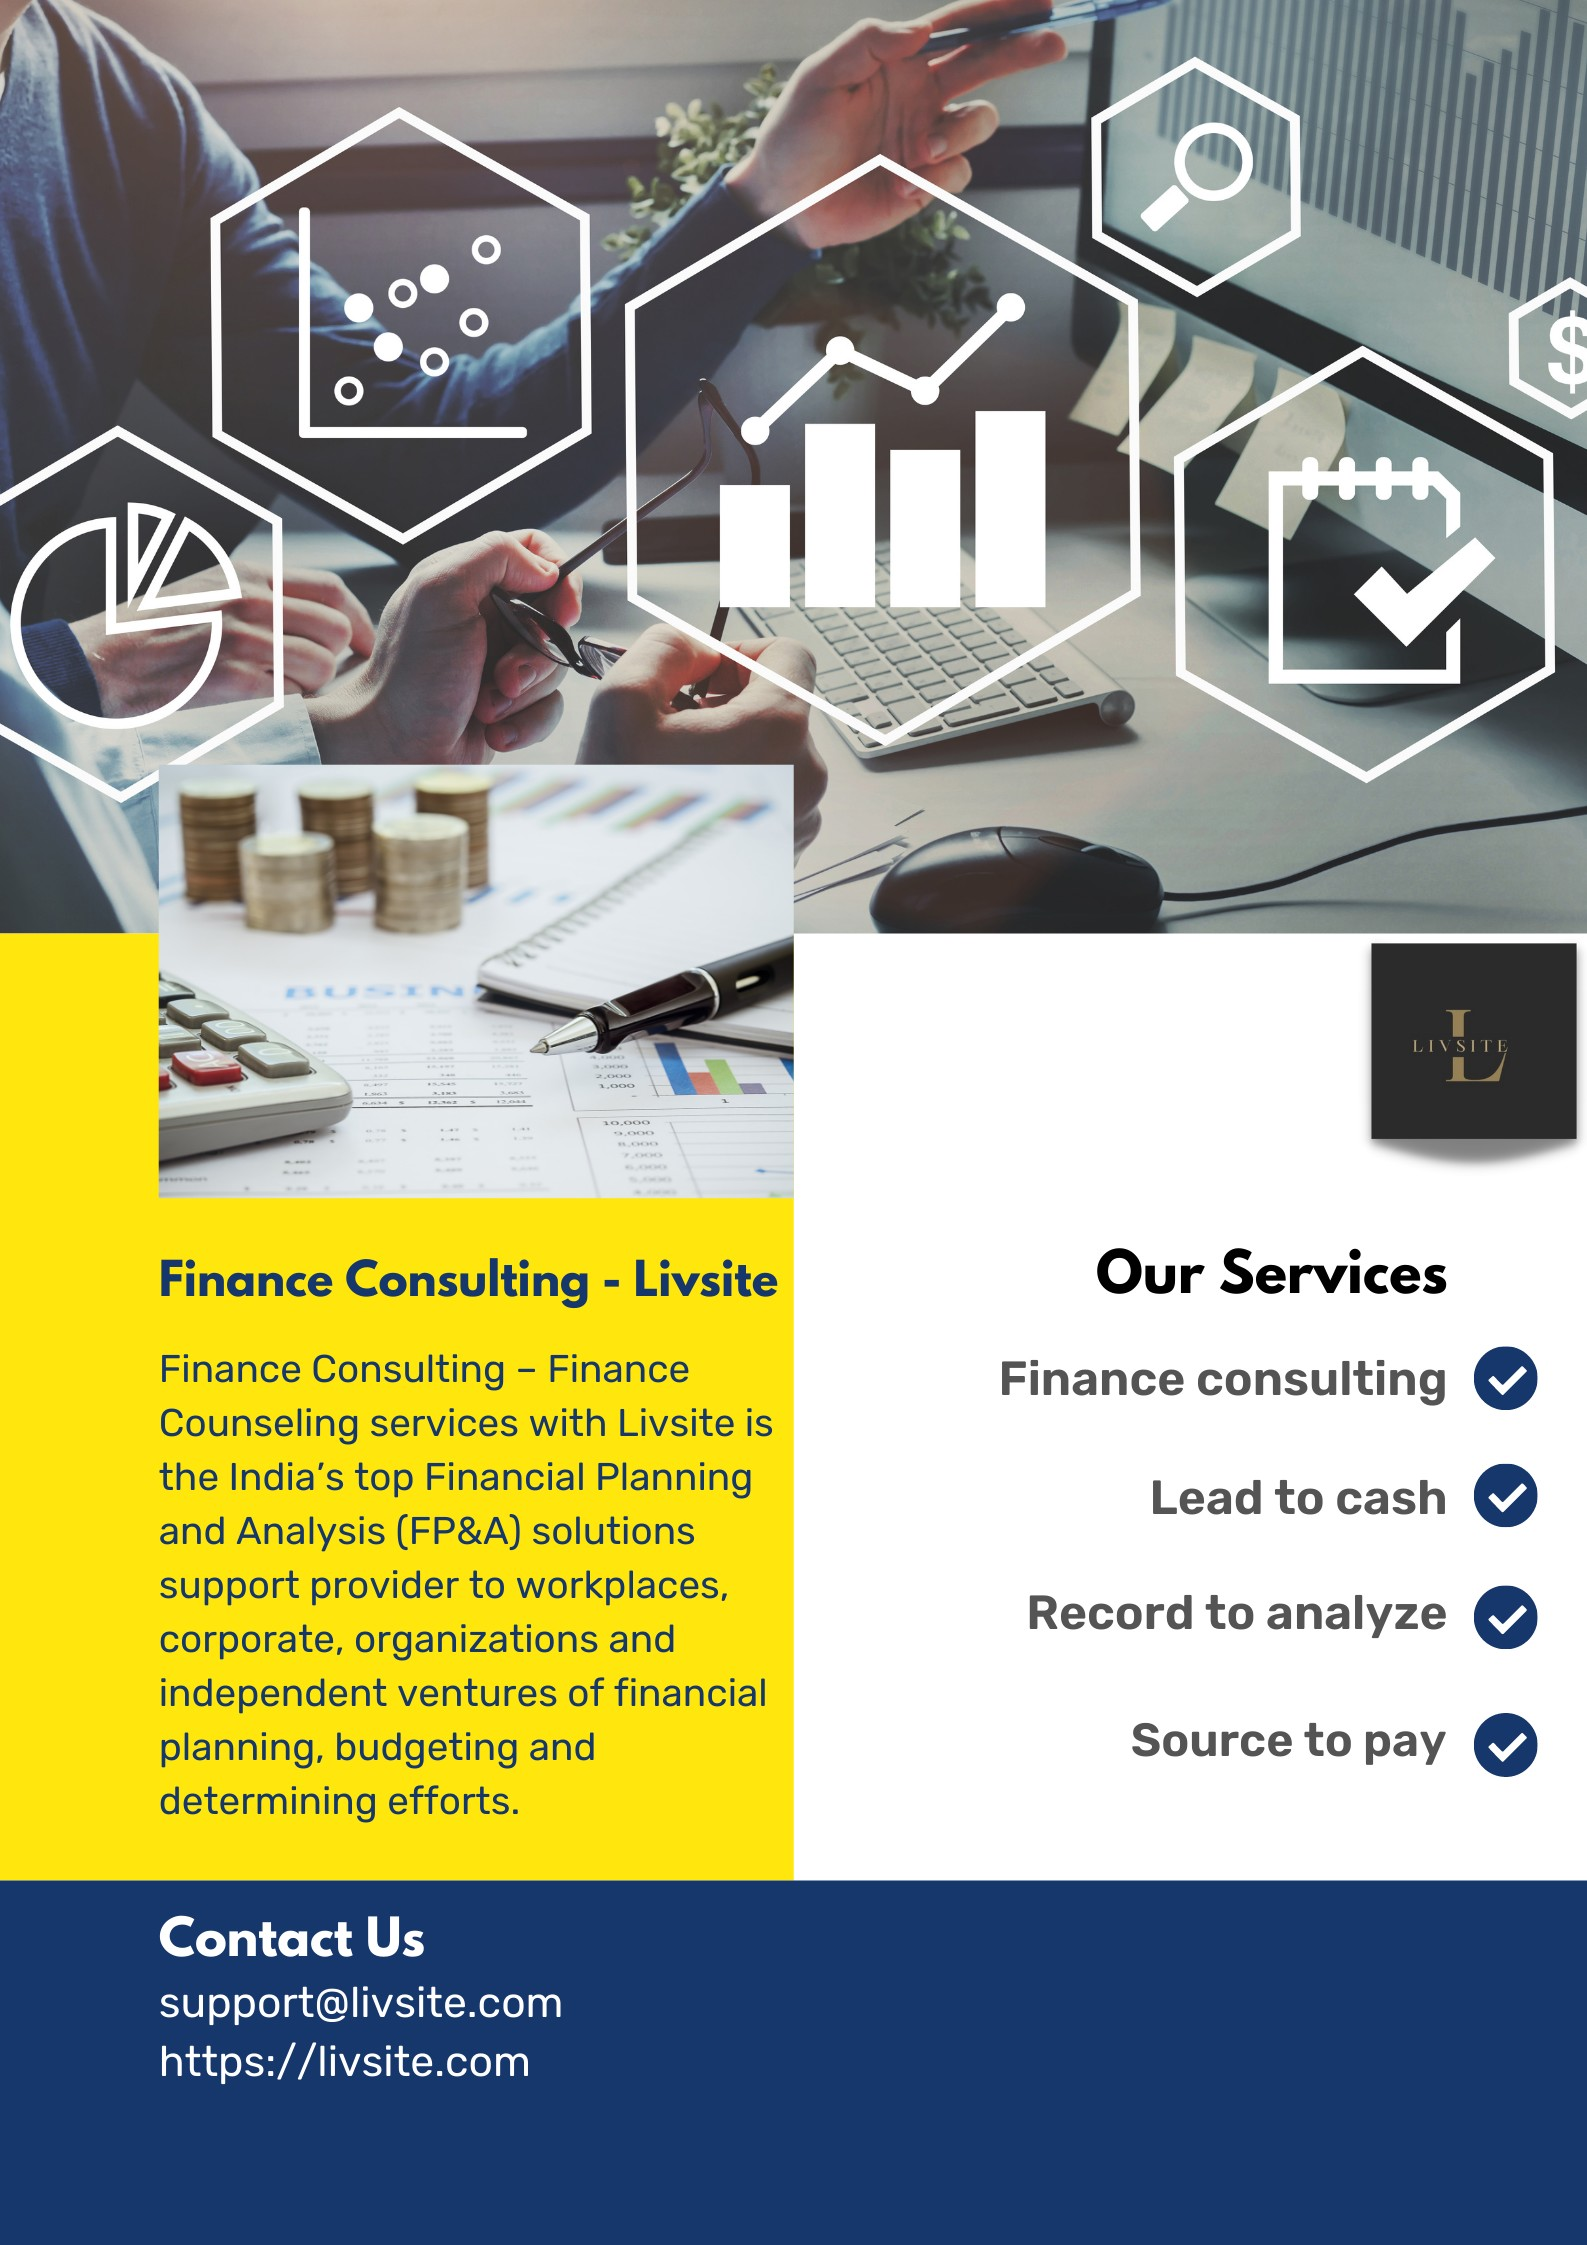 Finance Consulting - Livsite